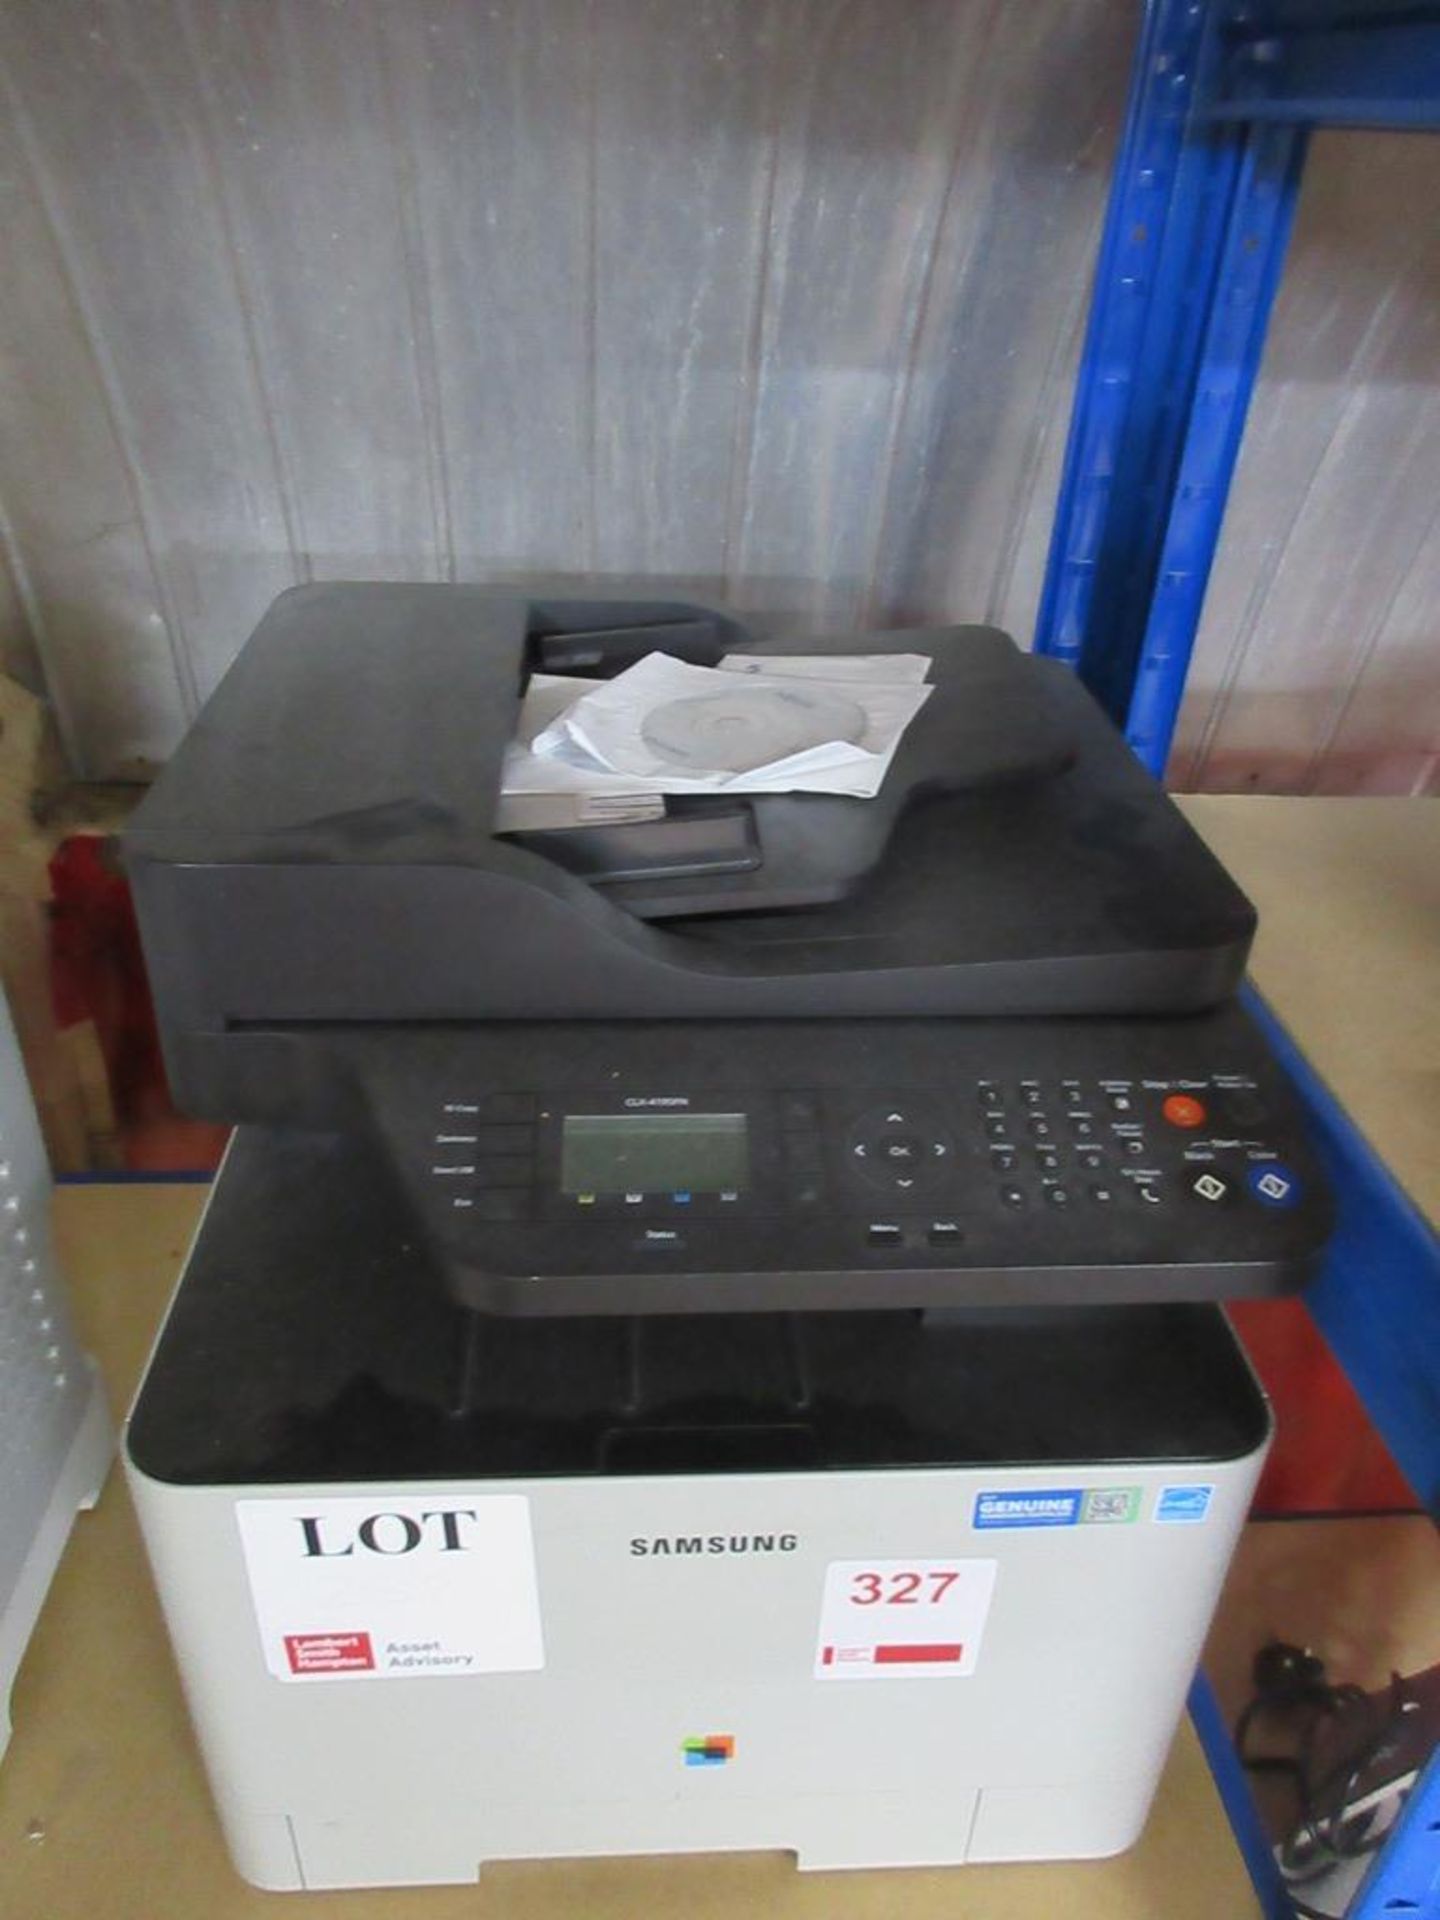 Samsung CLX-4195FN printer